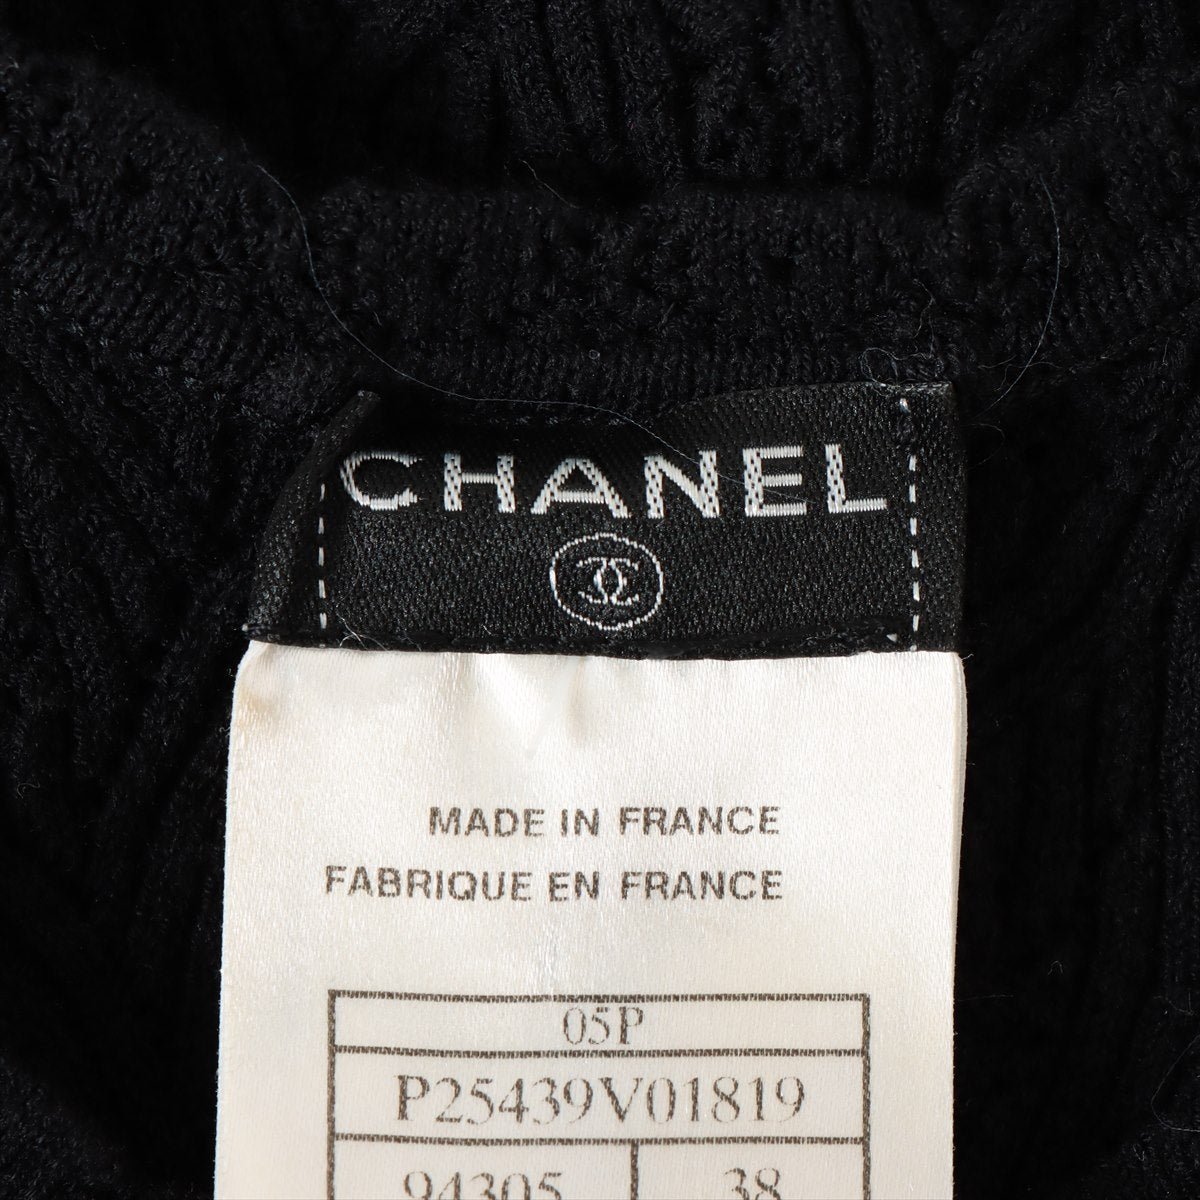 Chanel 05P Cotton & polyester Tank top 38 Ladies' Black  P25439V01819